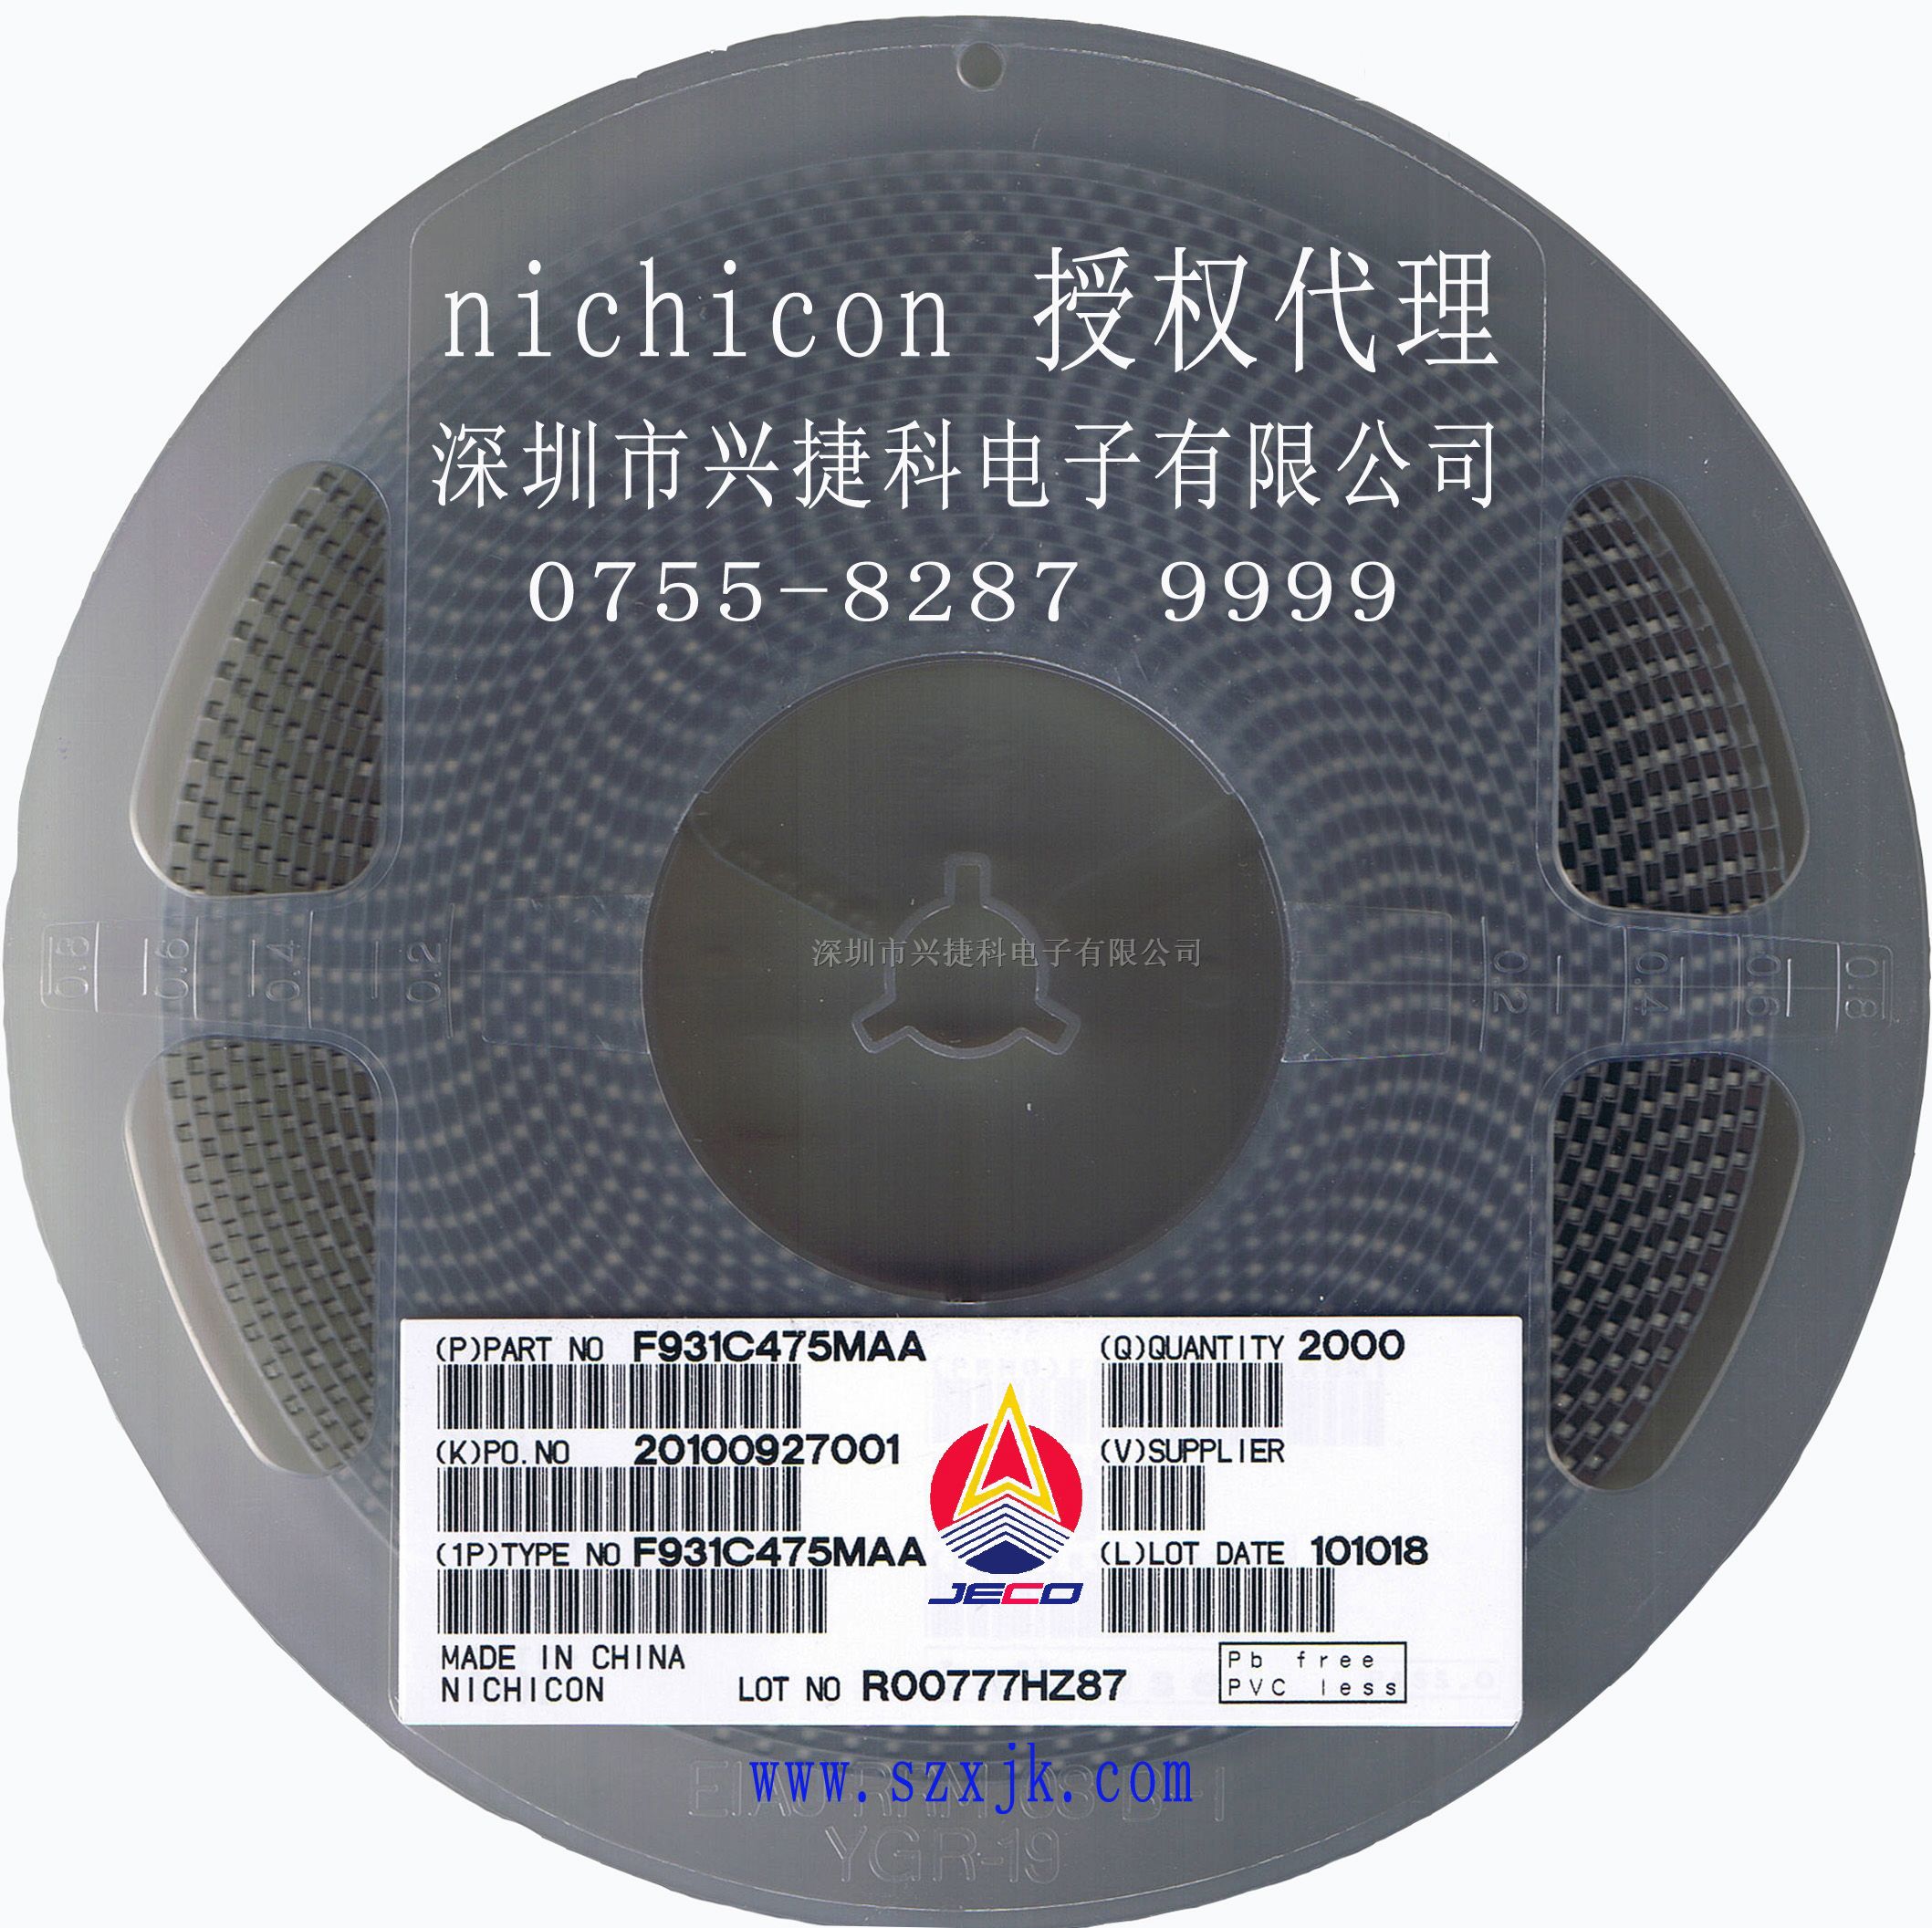 nichicon йȨ 4.7uF/16V A F93*75MAA